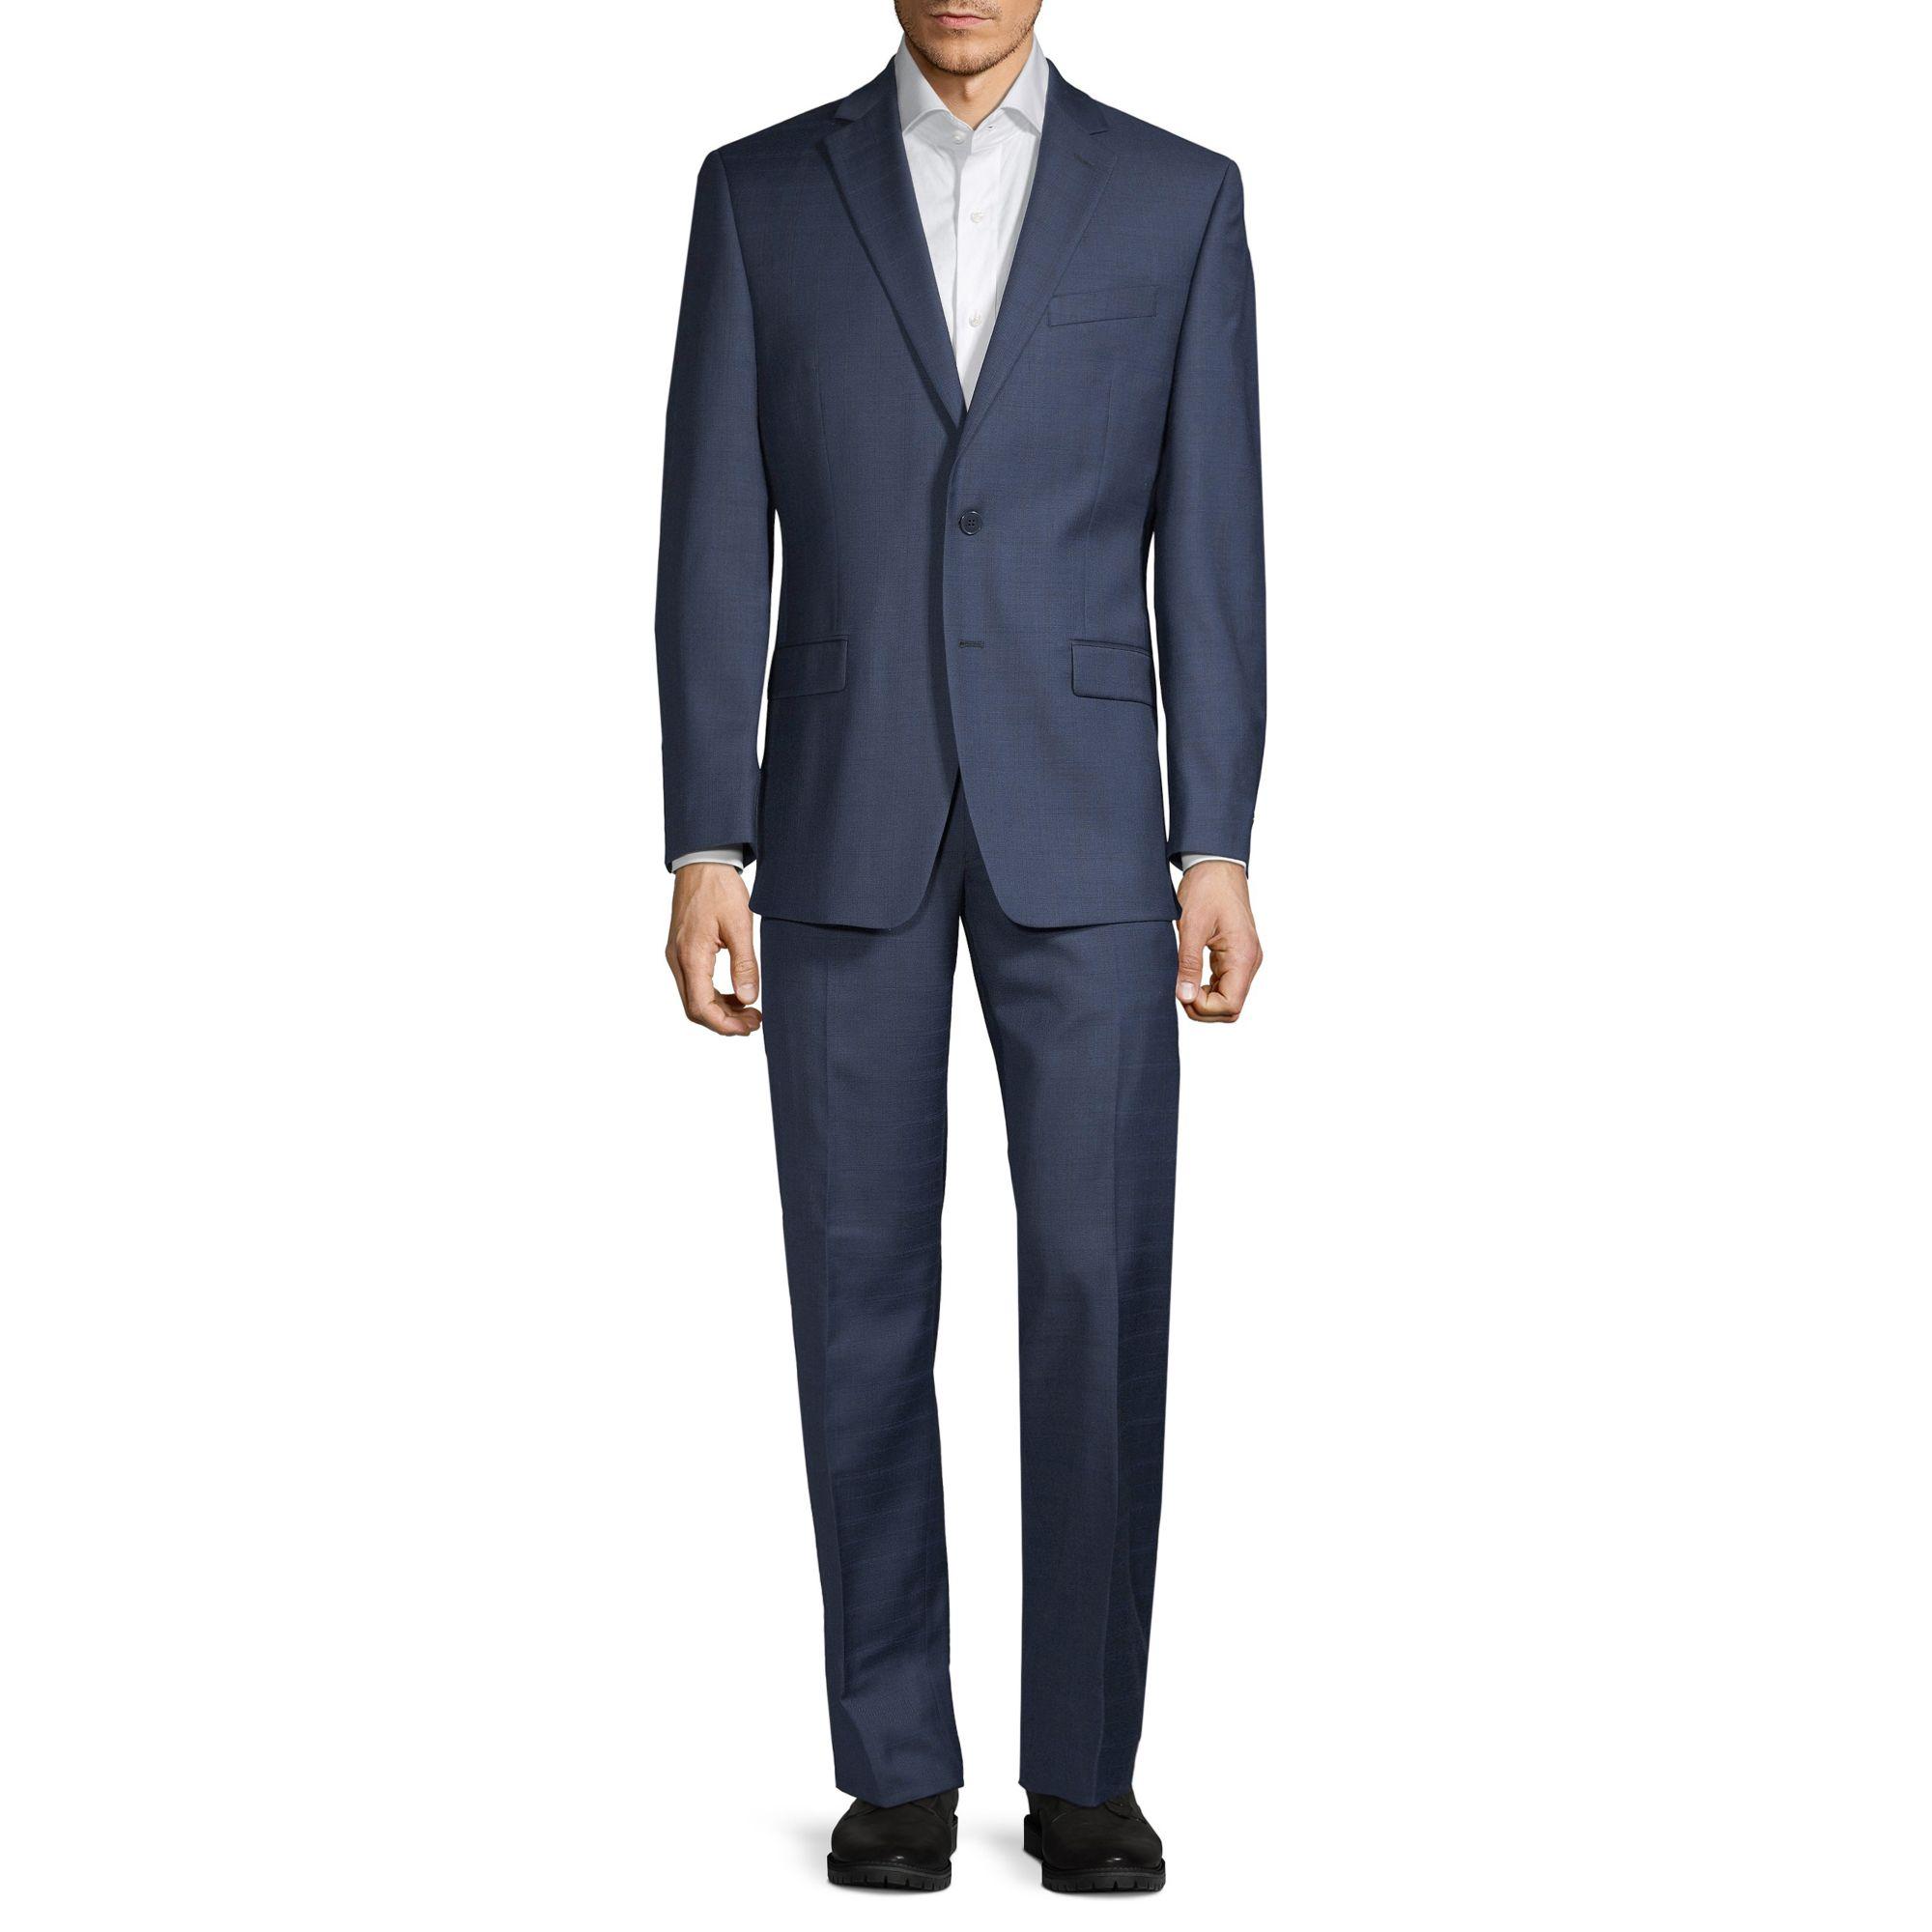 Calvin Klein Slim-fit Wool Suit in Navy (Blue) for Men - Lyst